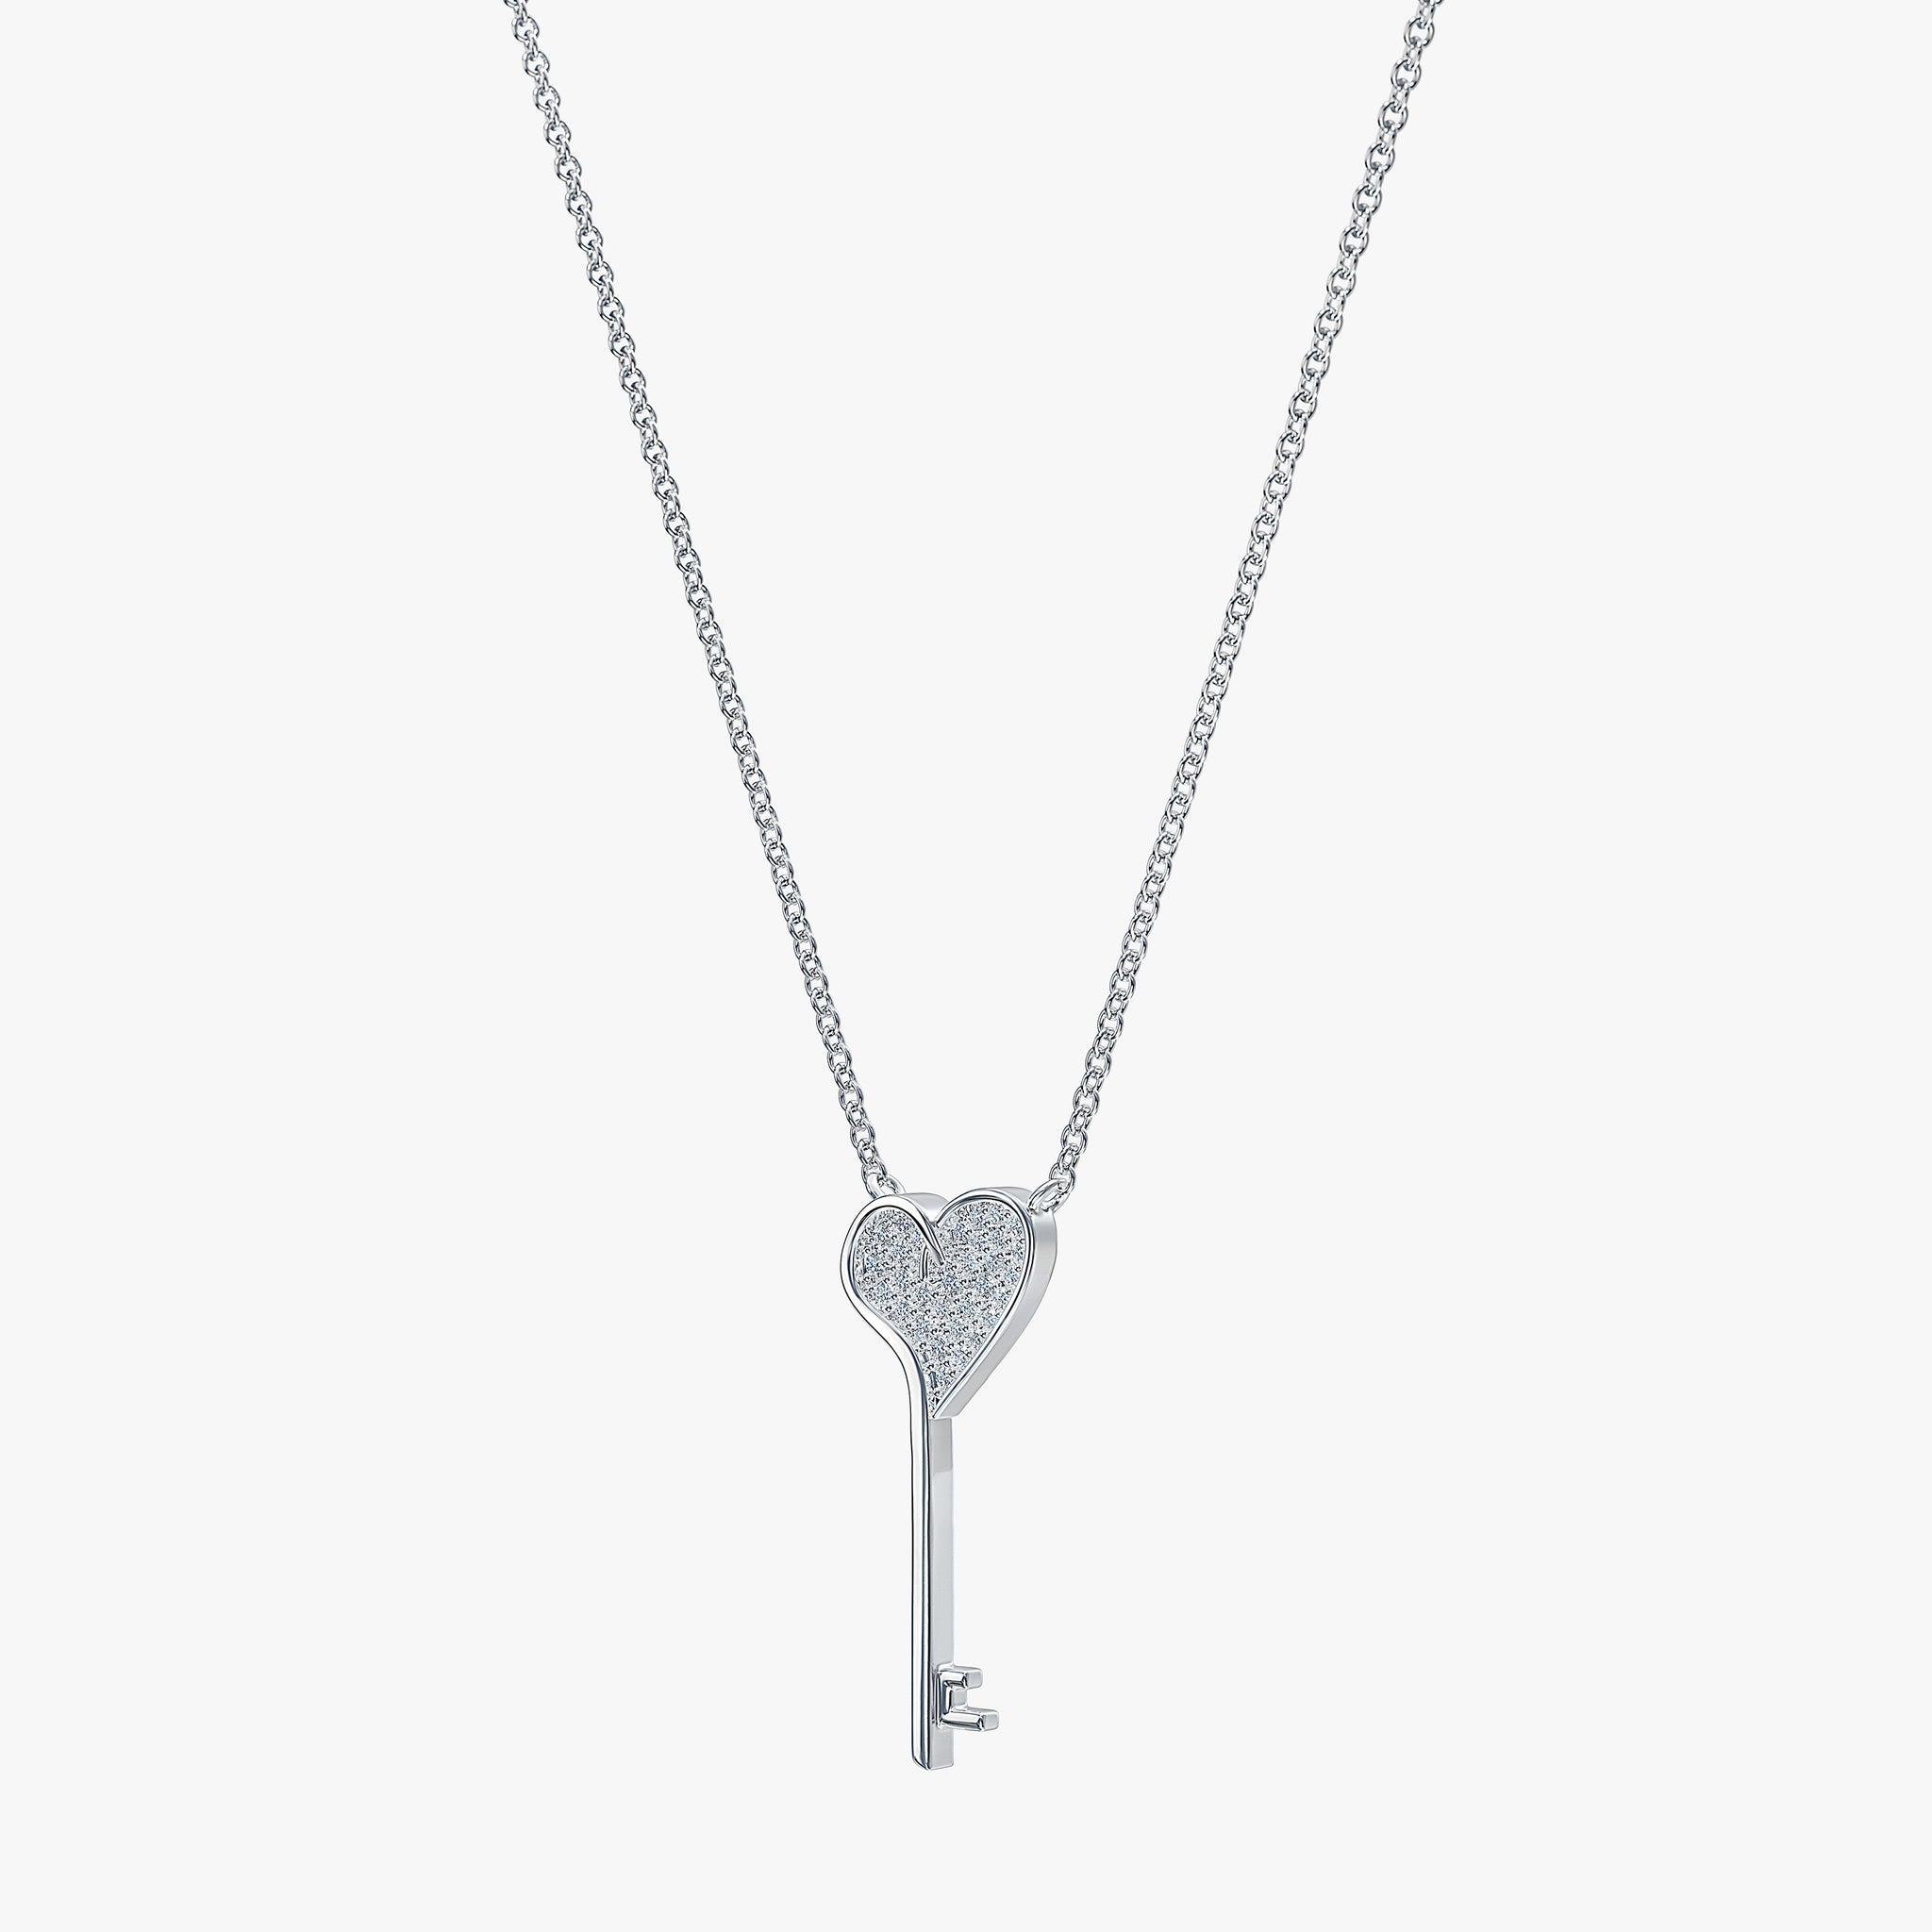 J'EVAR 14KT White Gold Heart Key ALTR Lab Grown Diamond Necklace Perspective View | 0.10 CT